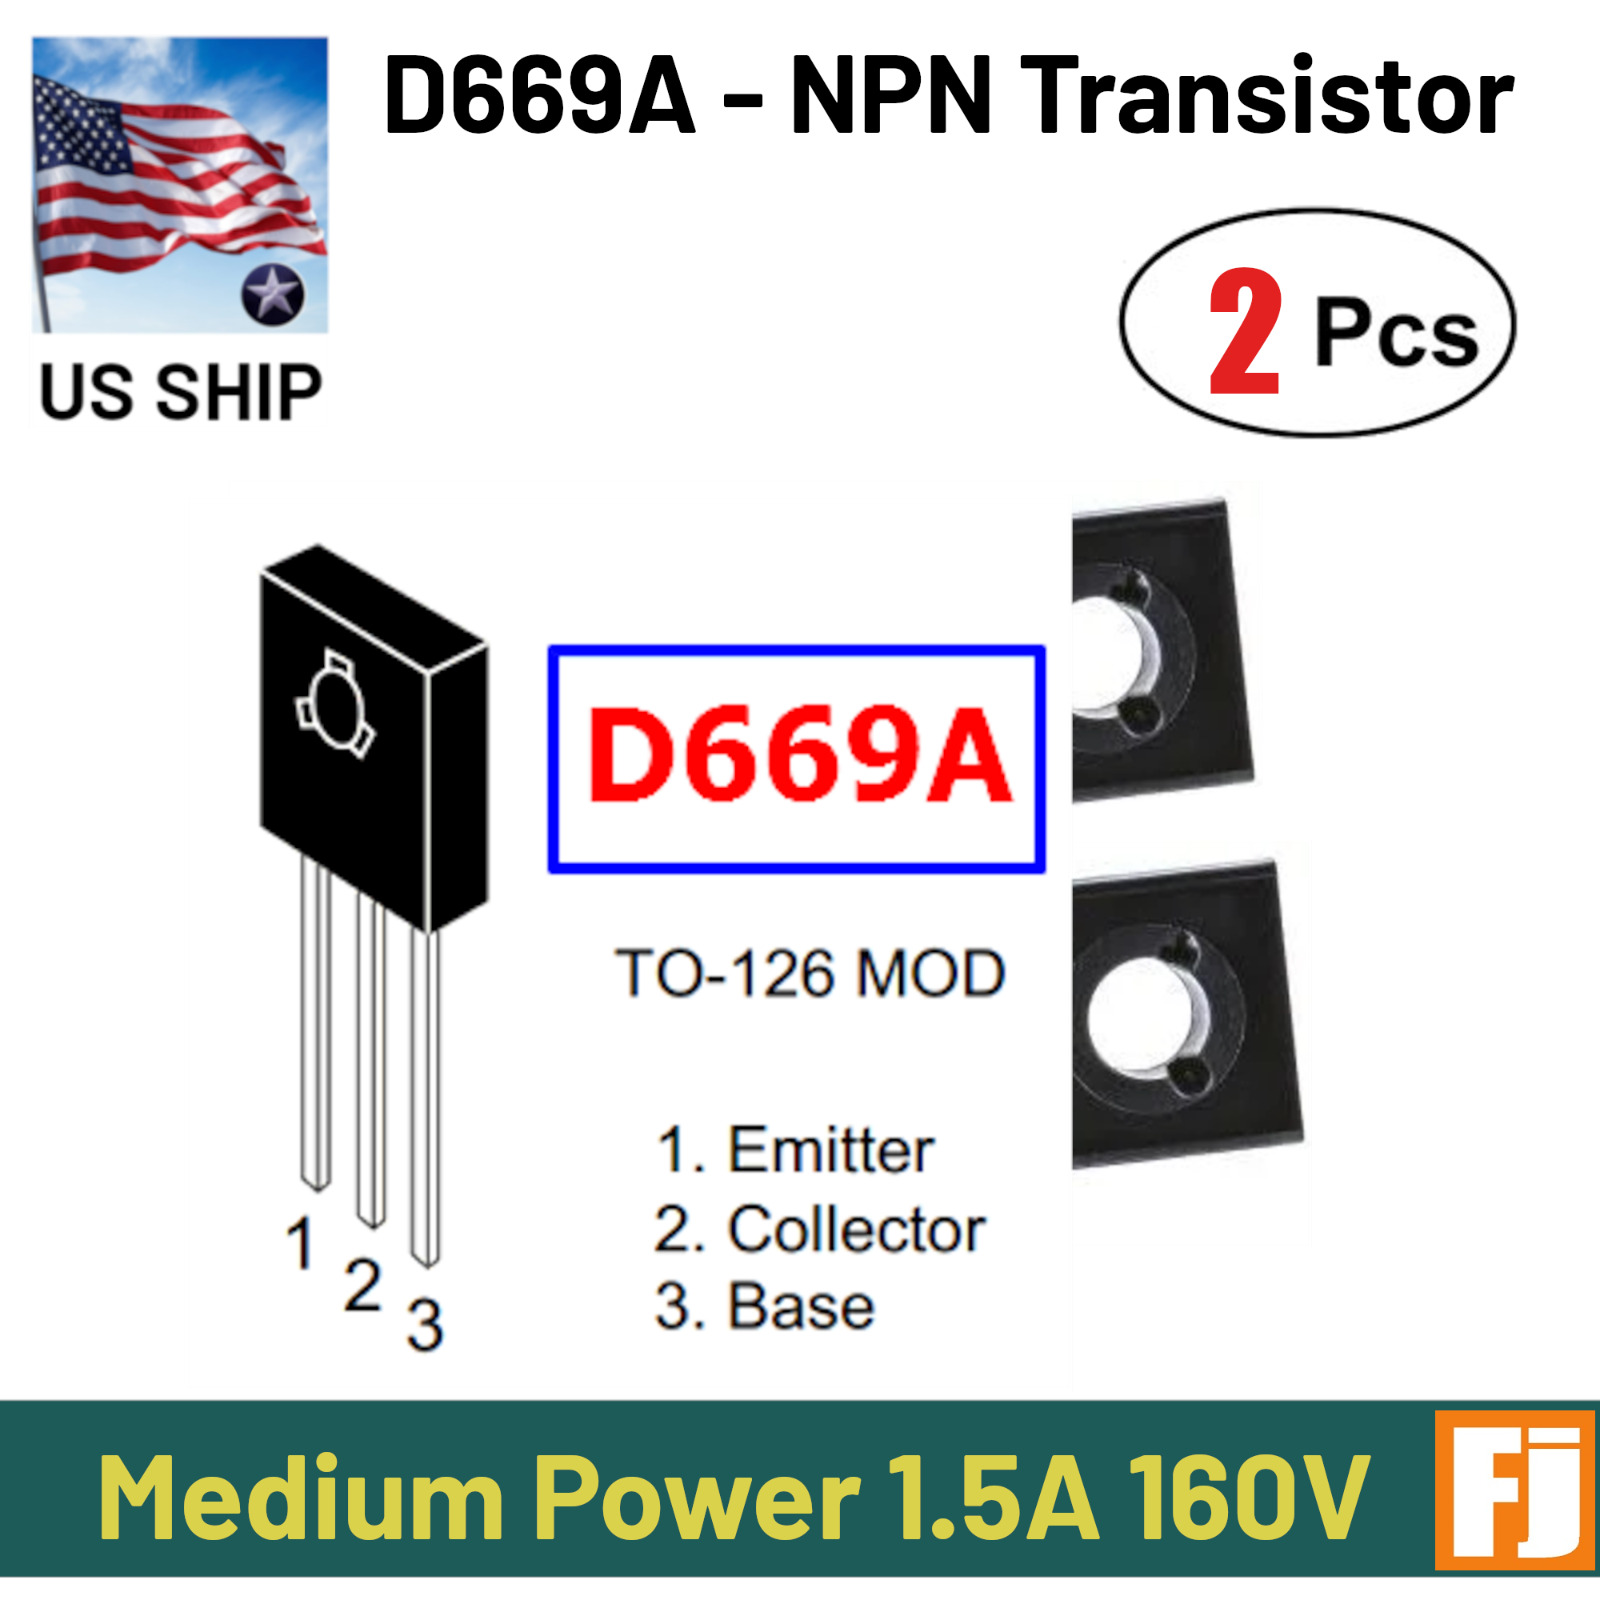 2 Pcs - D669A NPN Medium Power Transistor | TO-126 | 1.5 Amp 160 Volts | US Ship